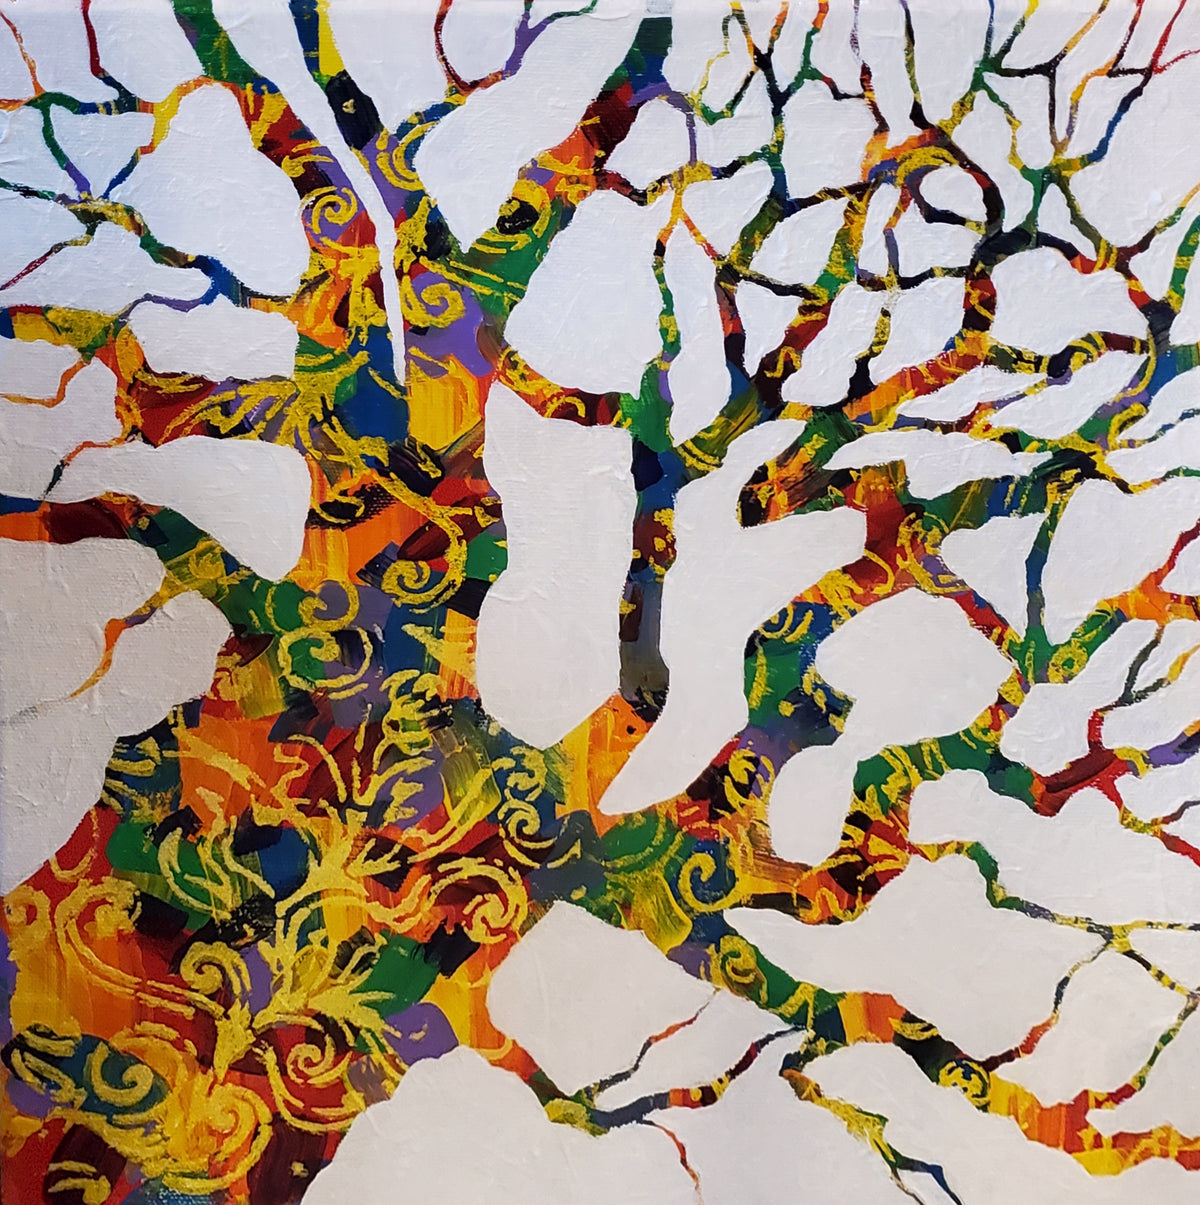 "Earth Day Tree" by Selena Doolittle McColley - Acrylic